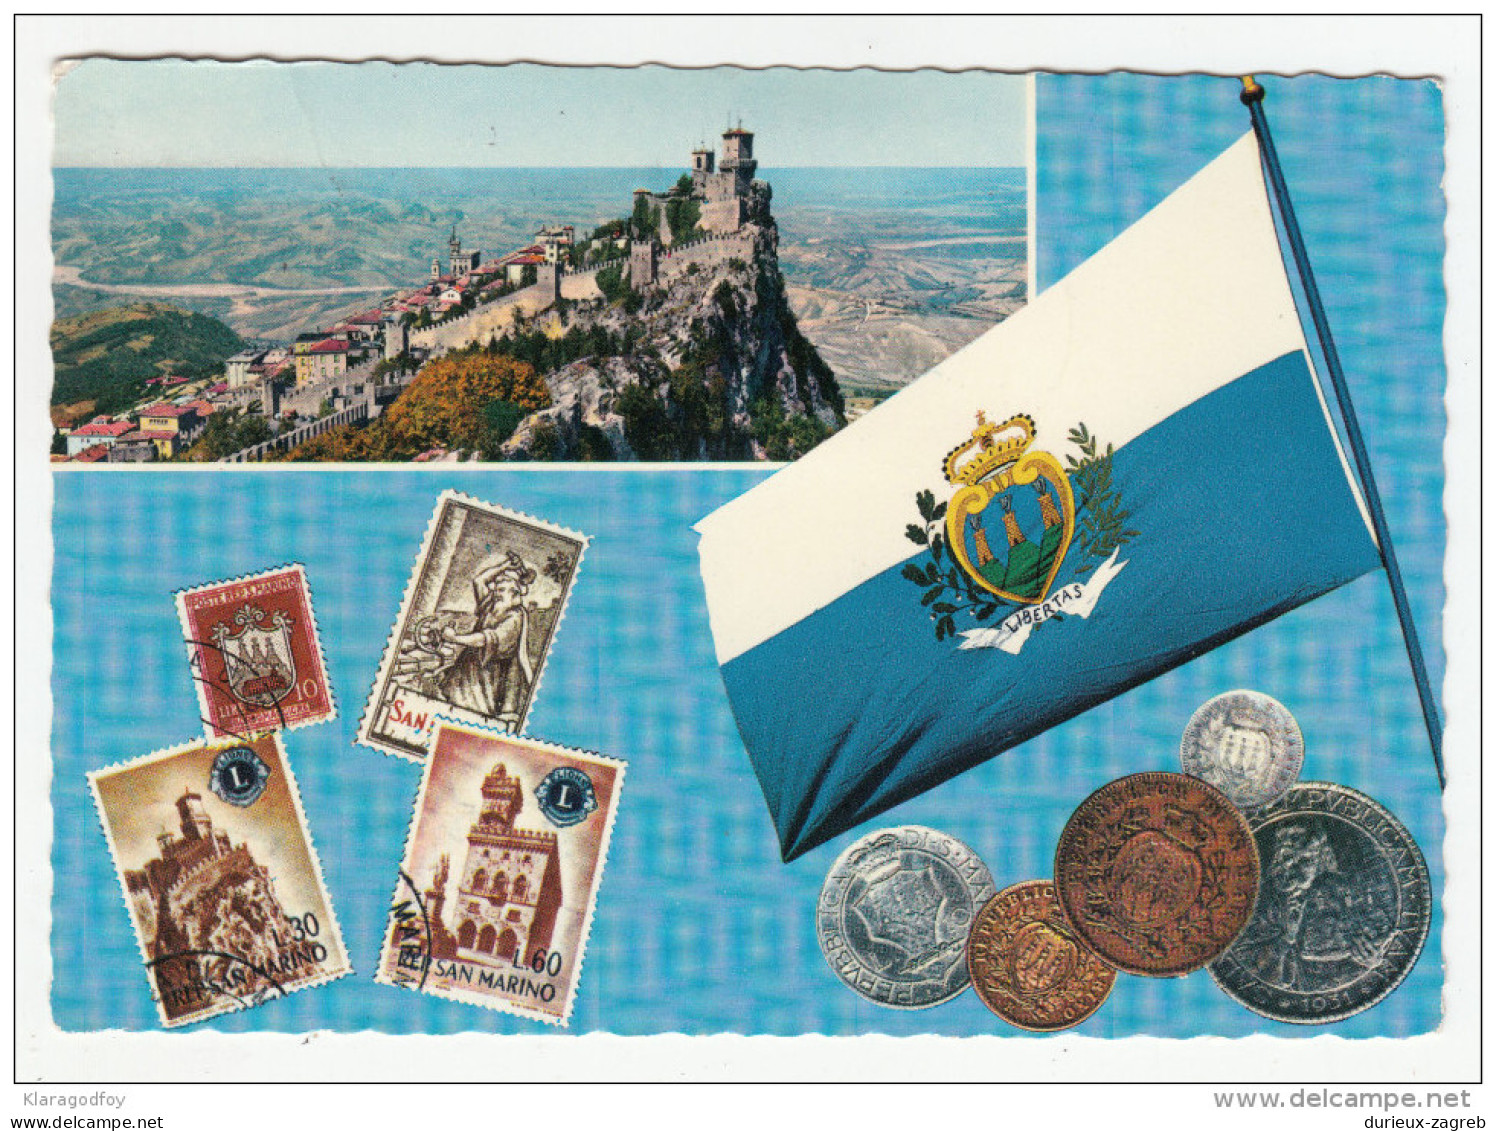 San Marino stamps on 5 travelled postcards 1966-1973 16IXB20